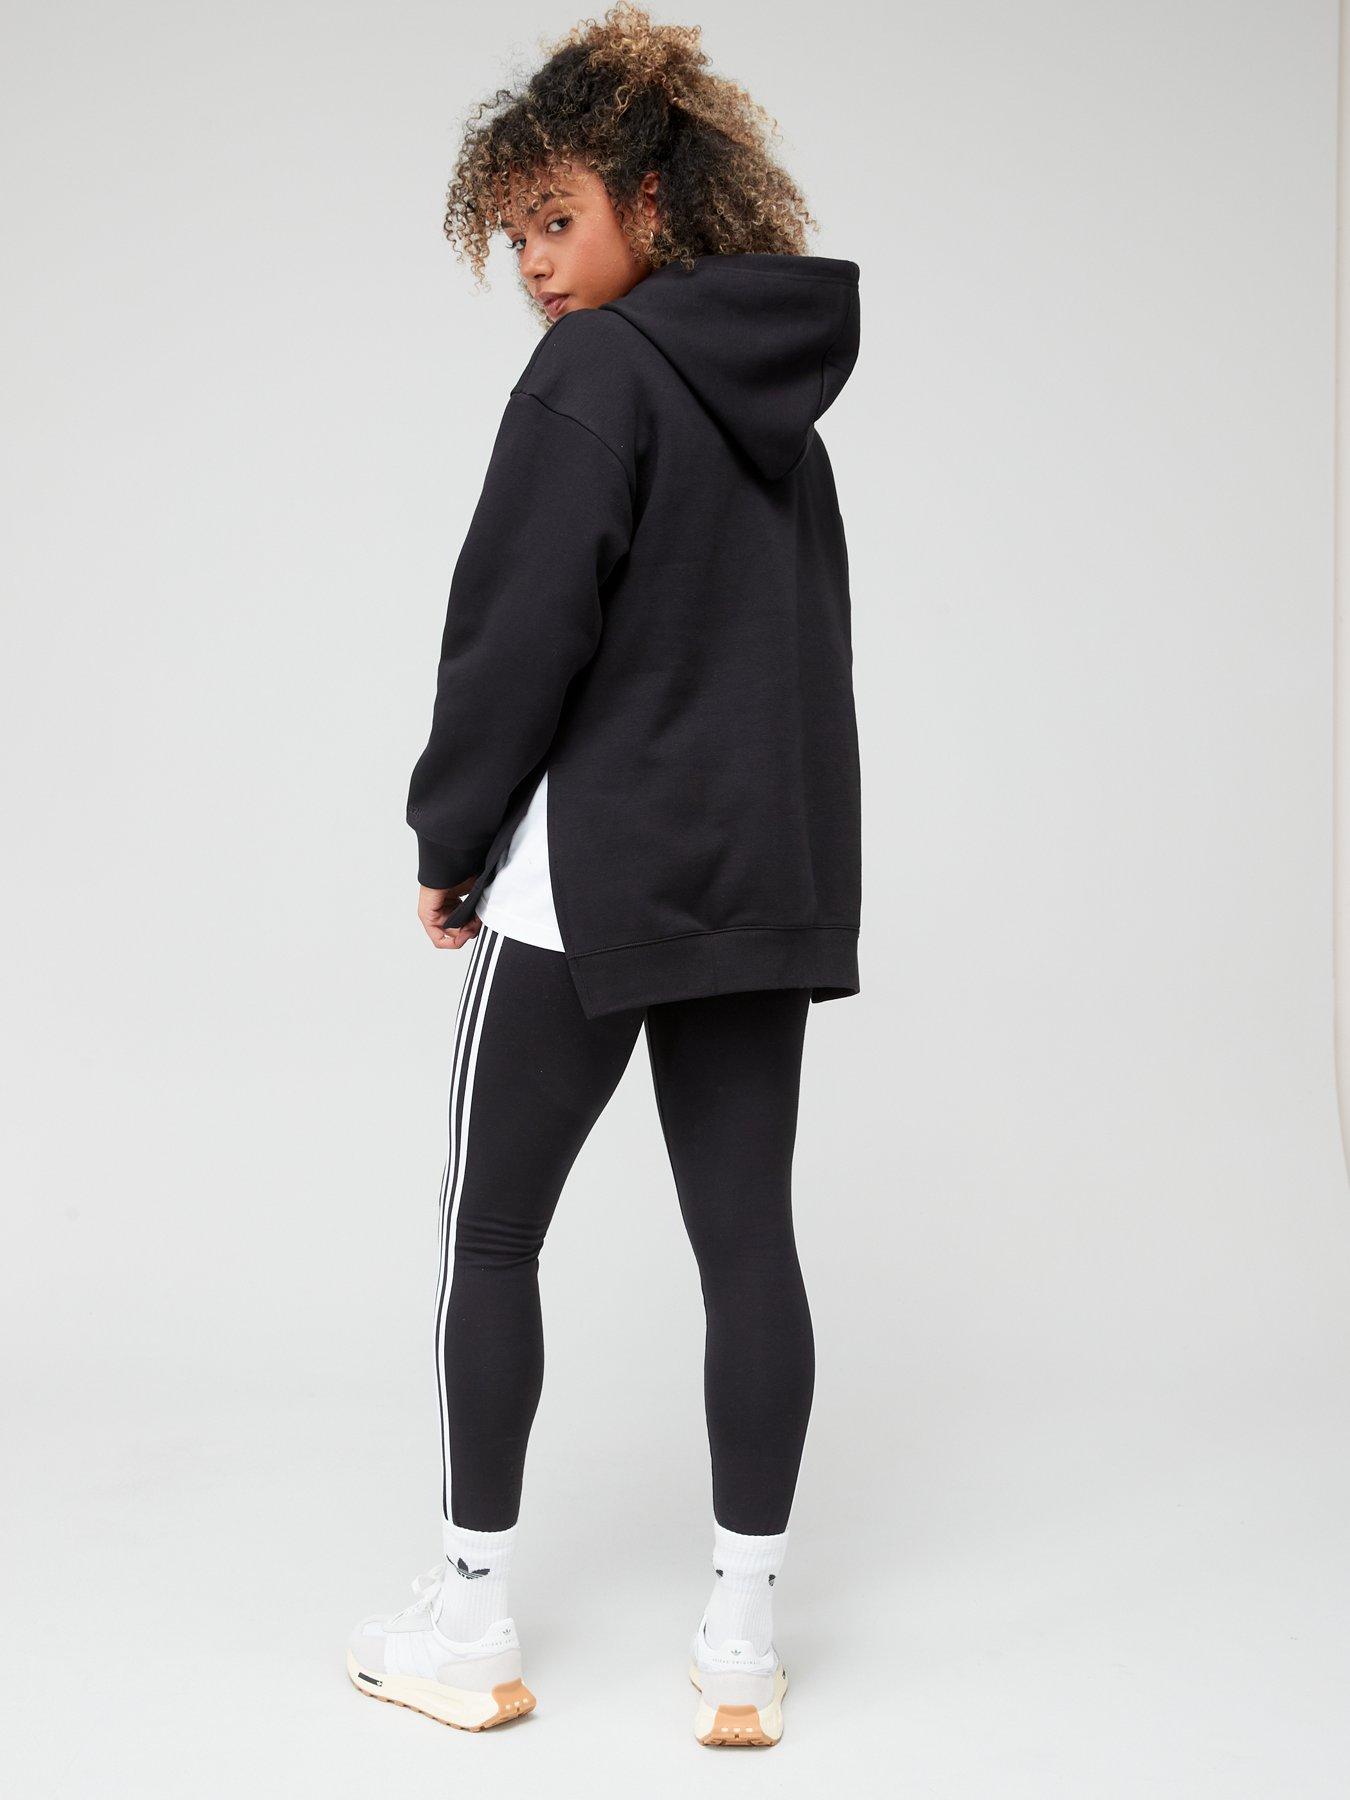 Fleece Black - Hoodie Graphic Szn Sportswear adidas All